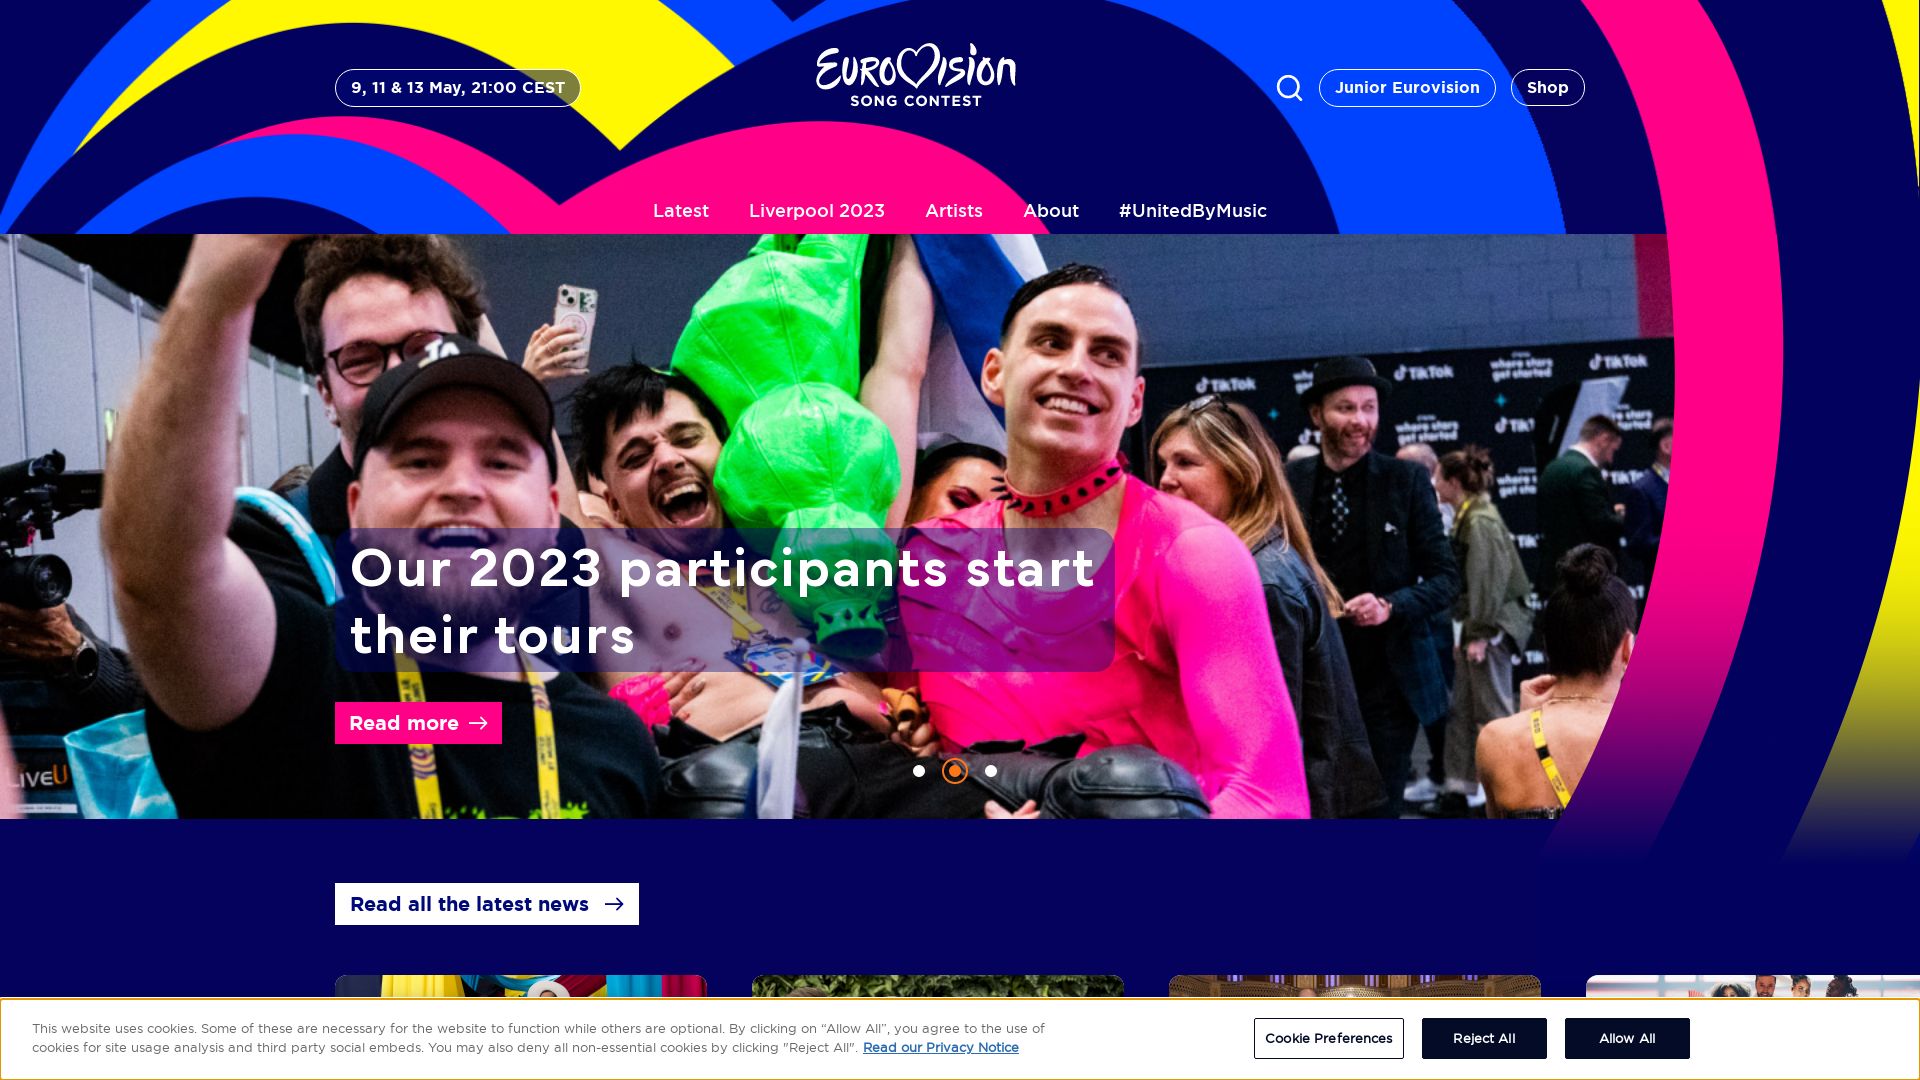 Website status eurovision.tv is   ONLINE